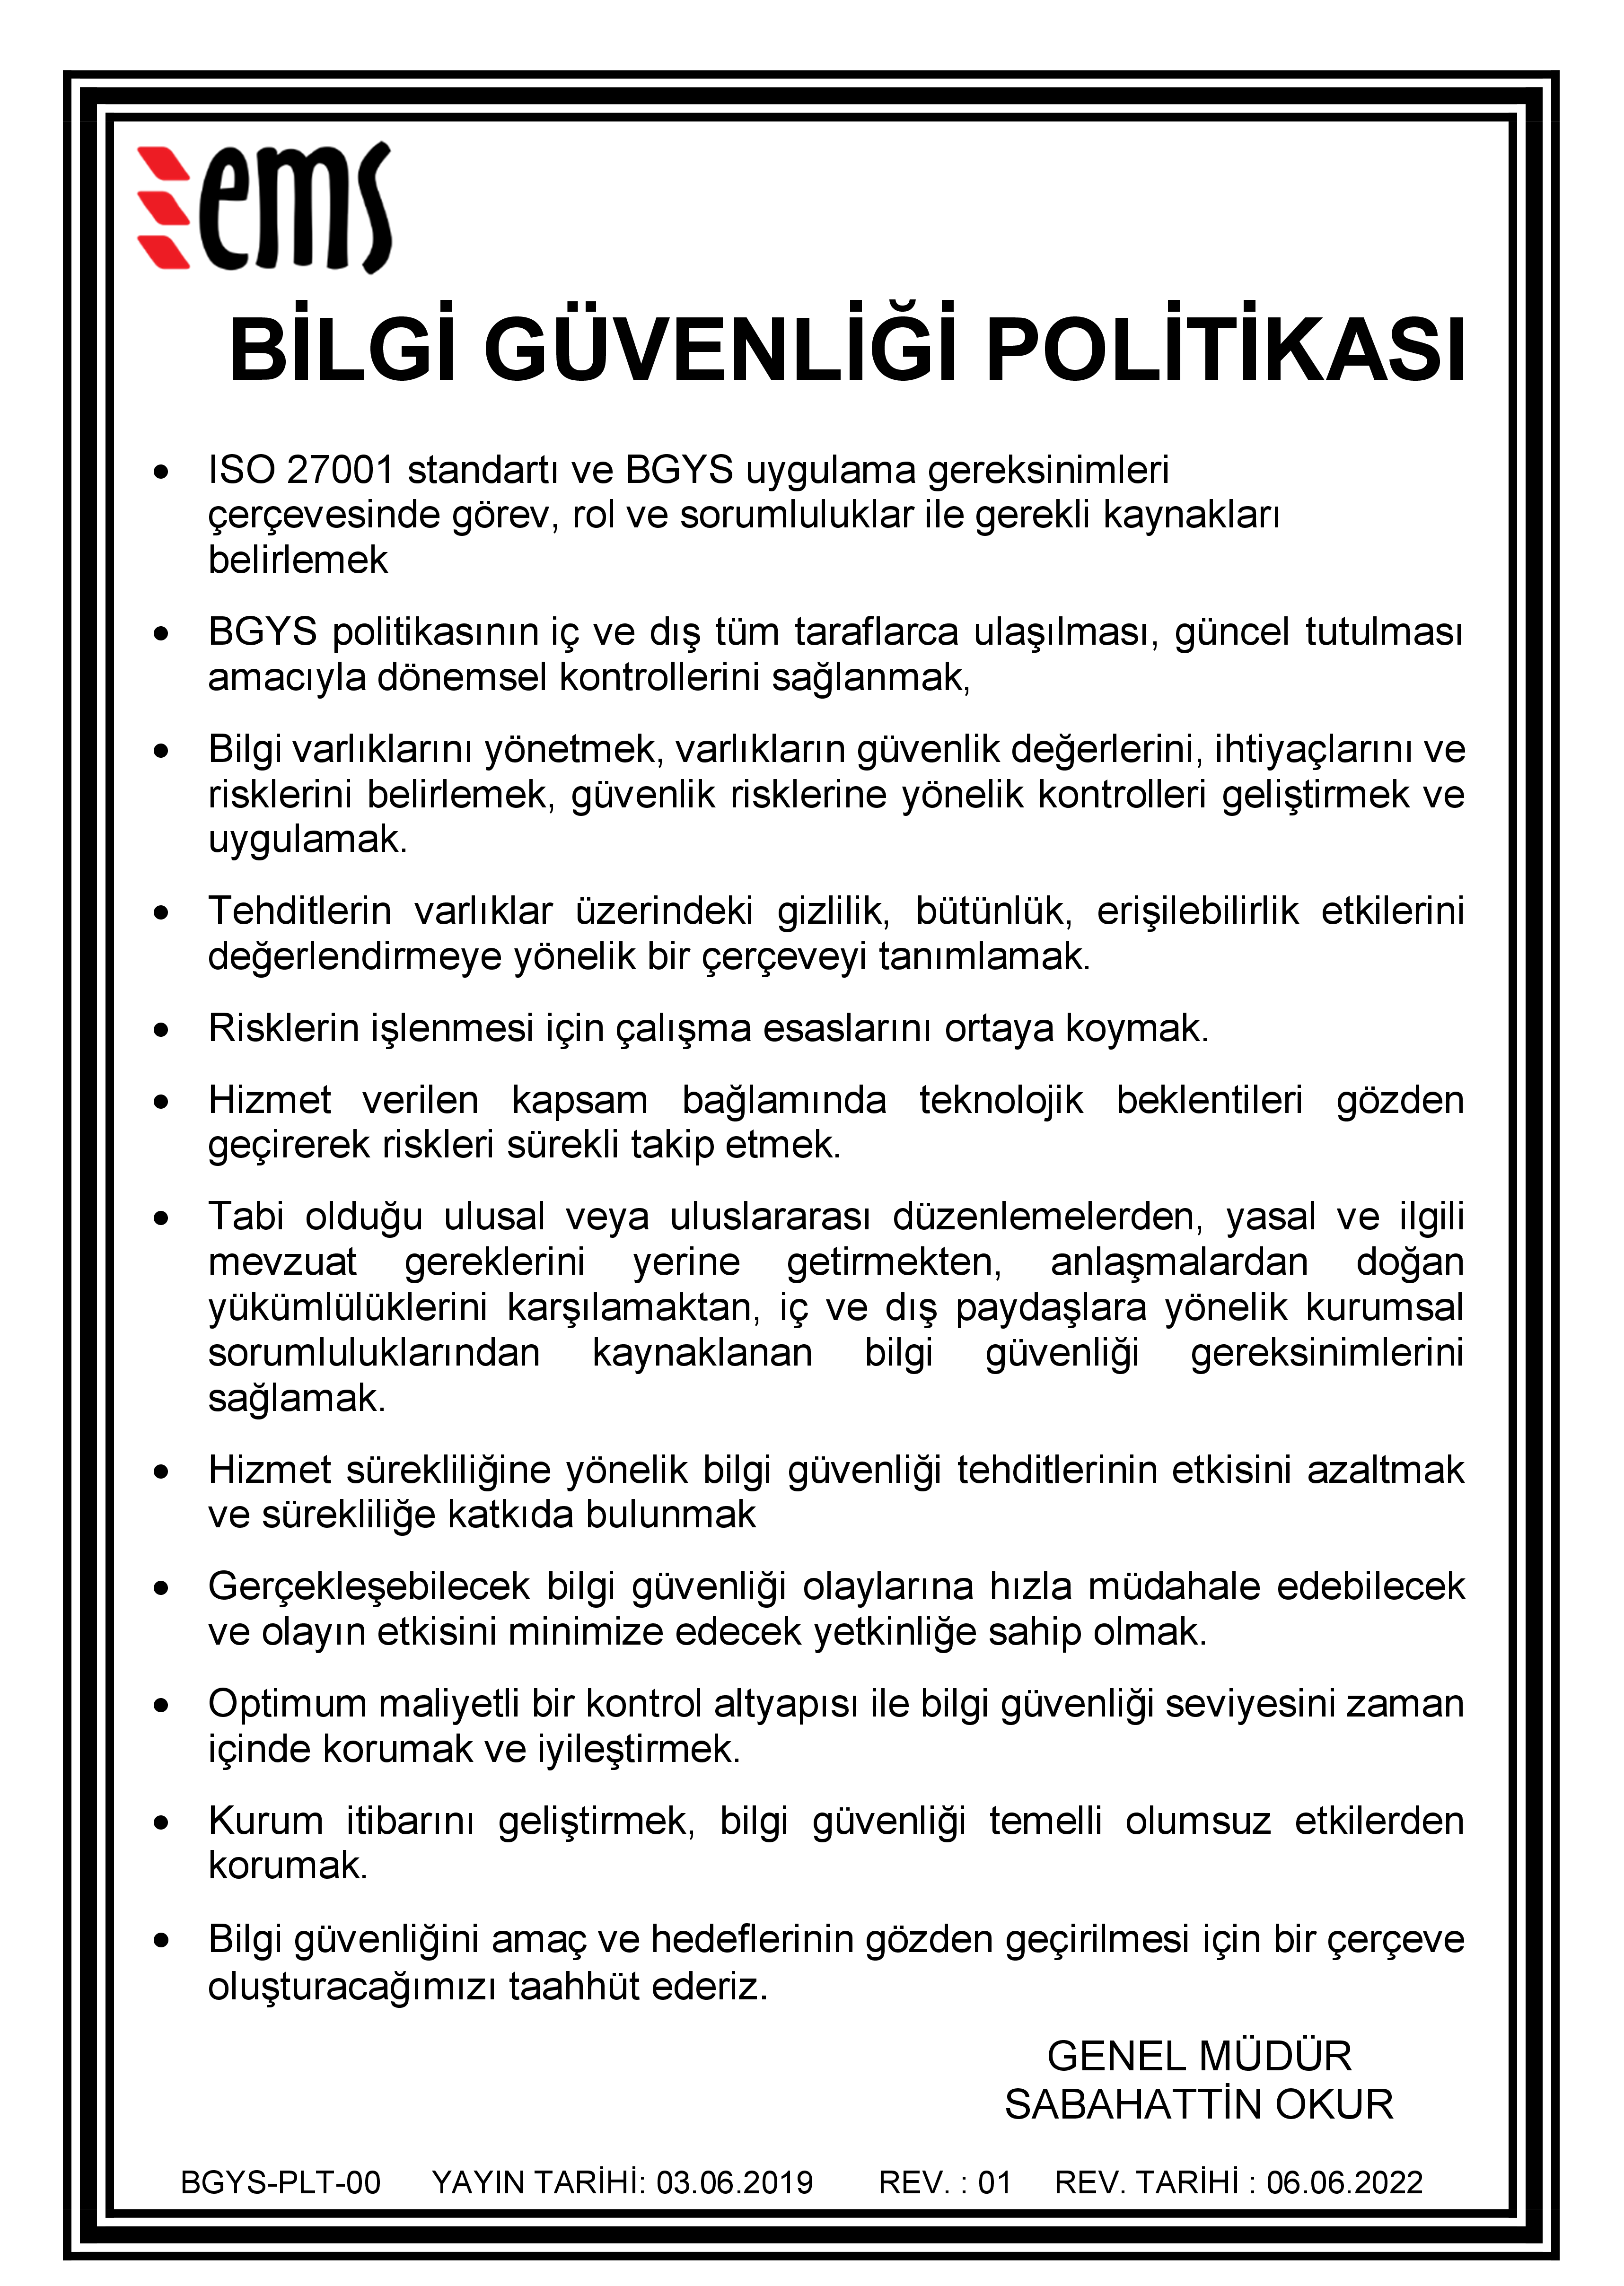 BGYS-PLT-00-REV01-BILGI-GUVENLIGI-POLITIKASI.png